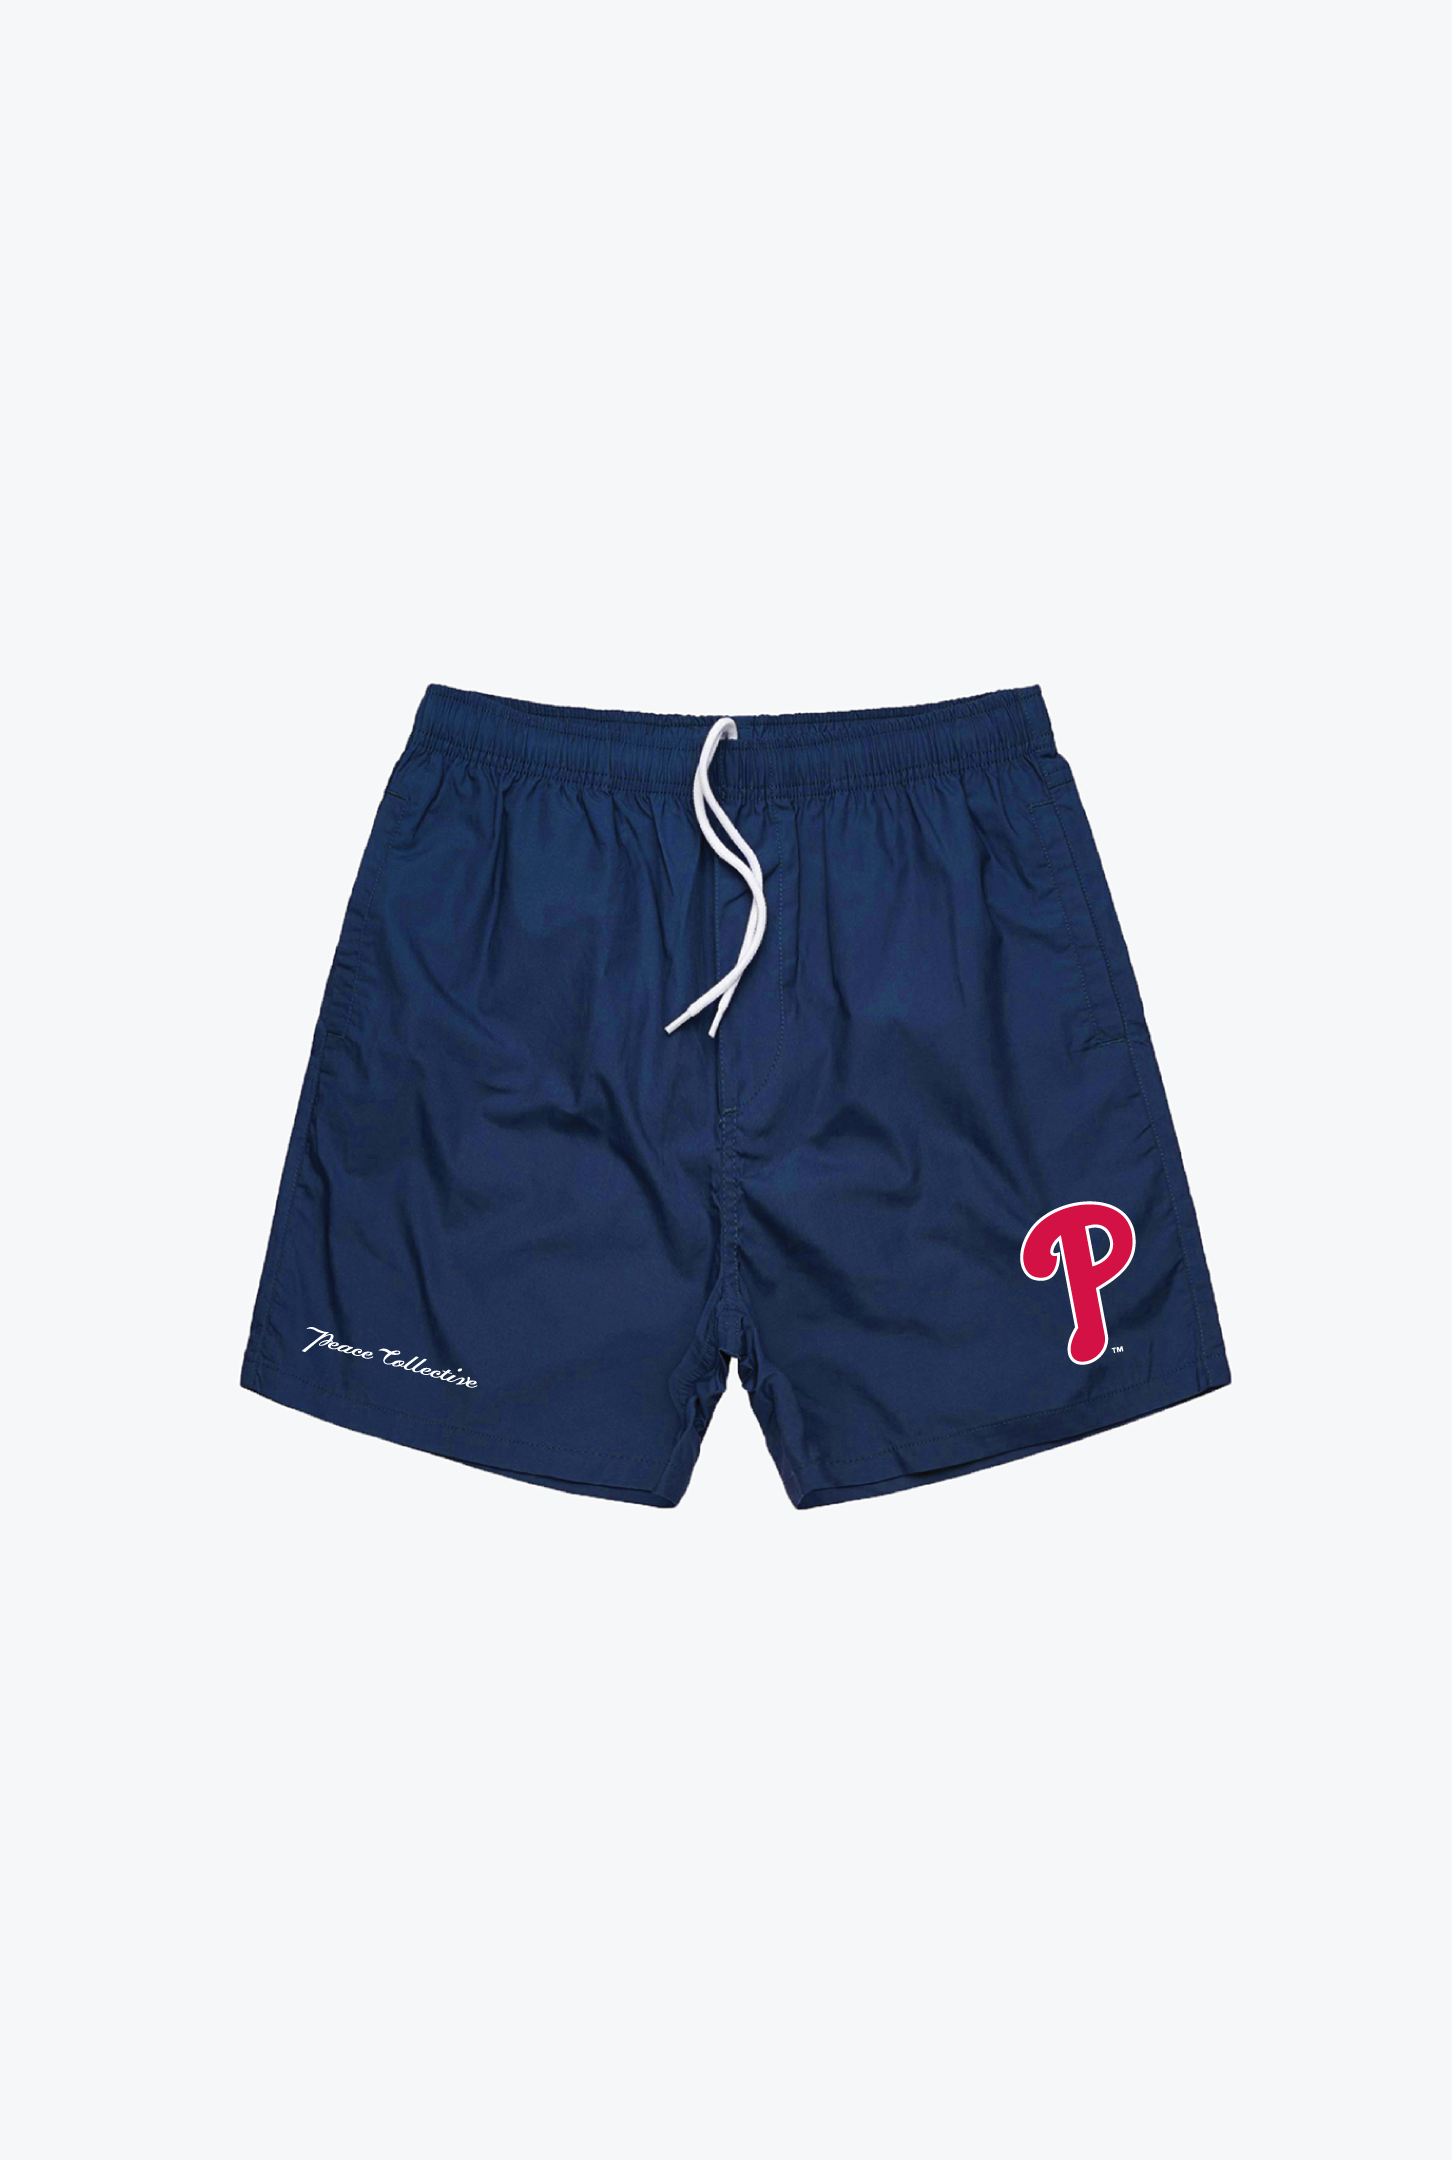 Philadelphia Phillies Board Shorts - Navy